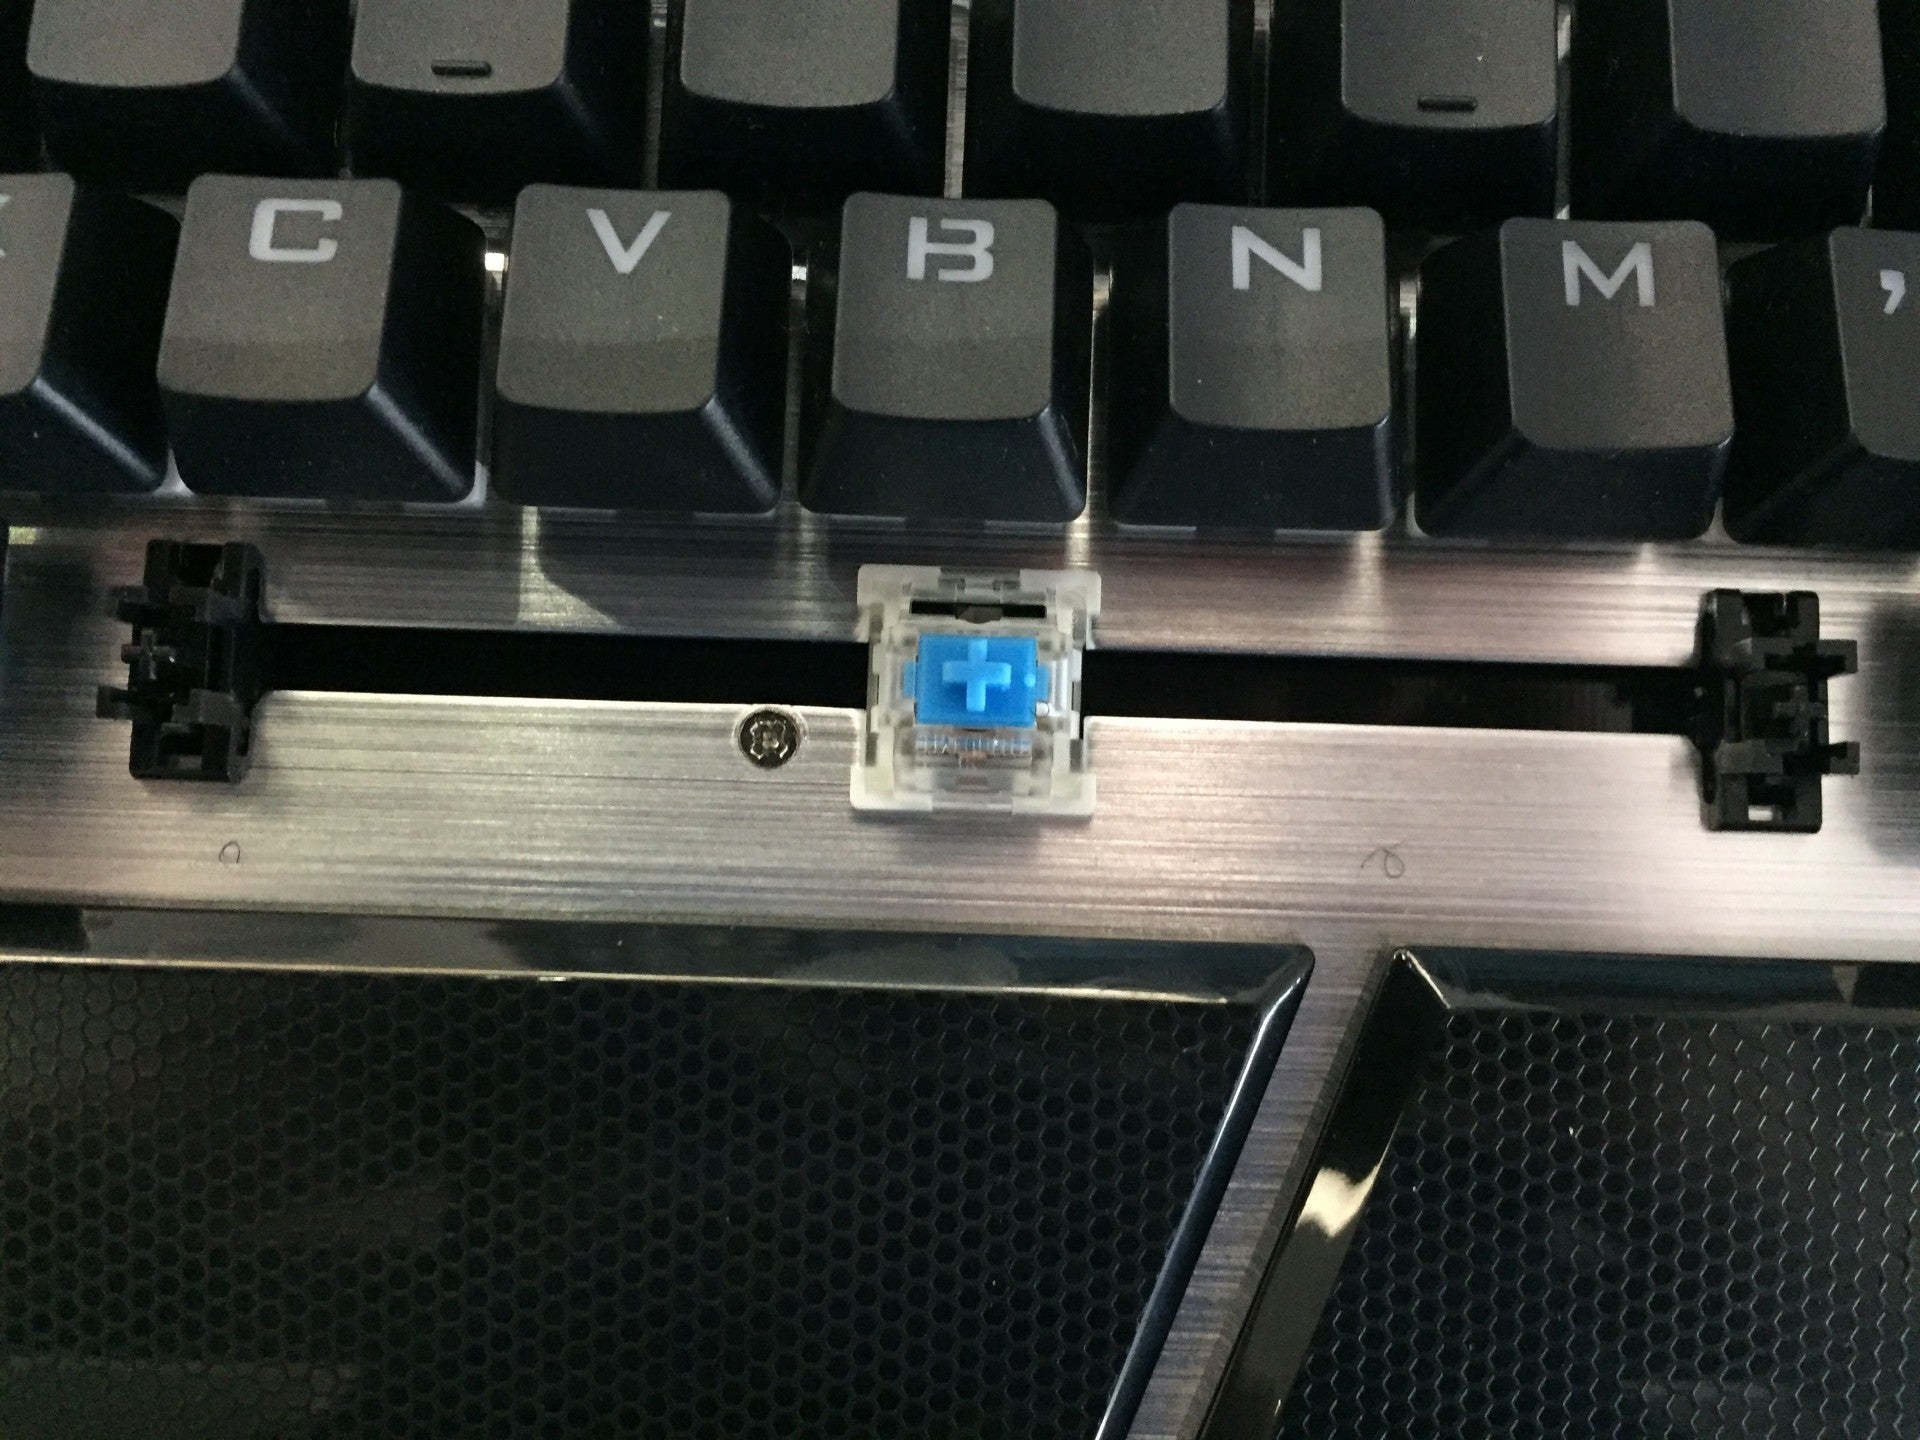 Space bar switch of HV-KB378L mechanical keyboard.